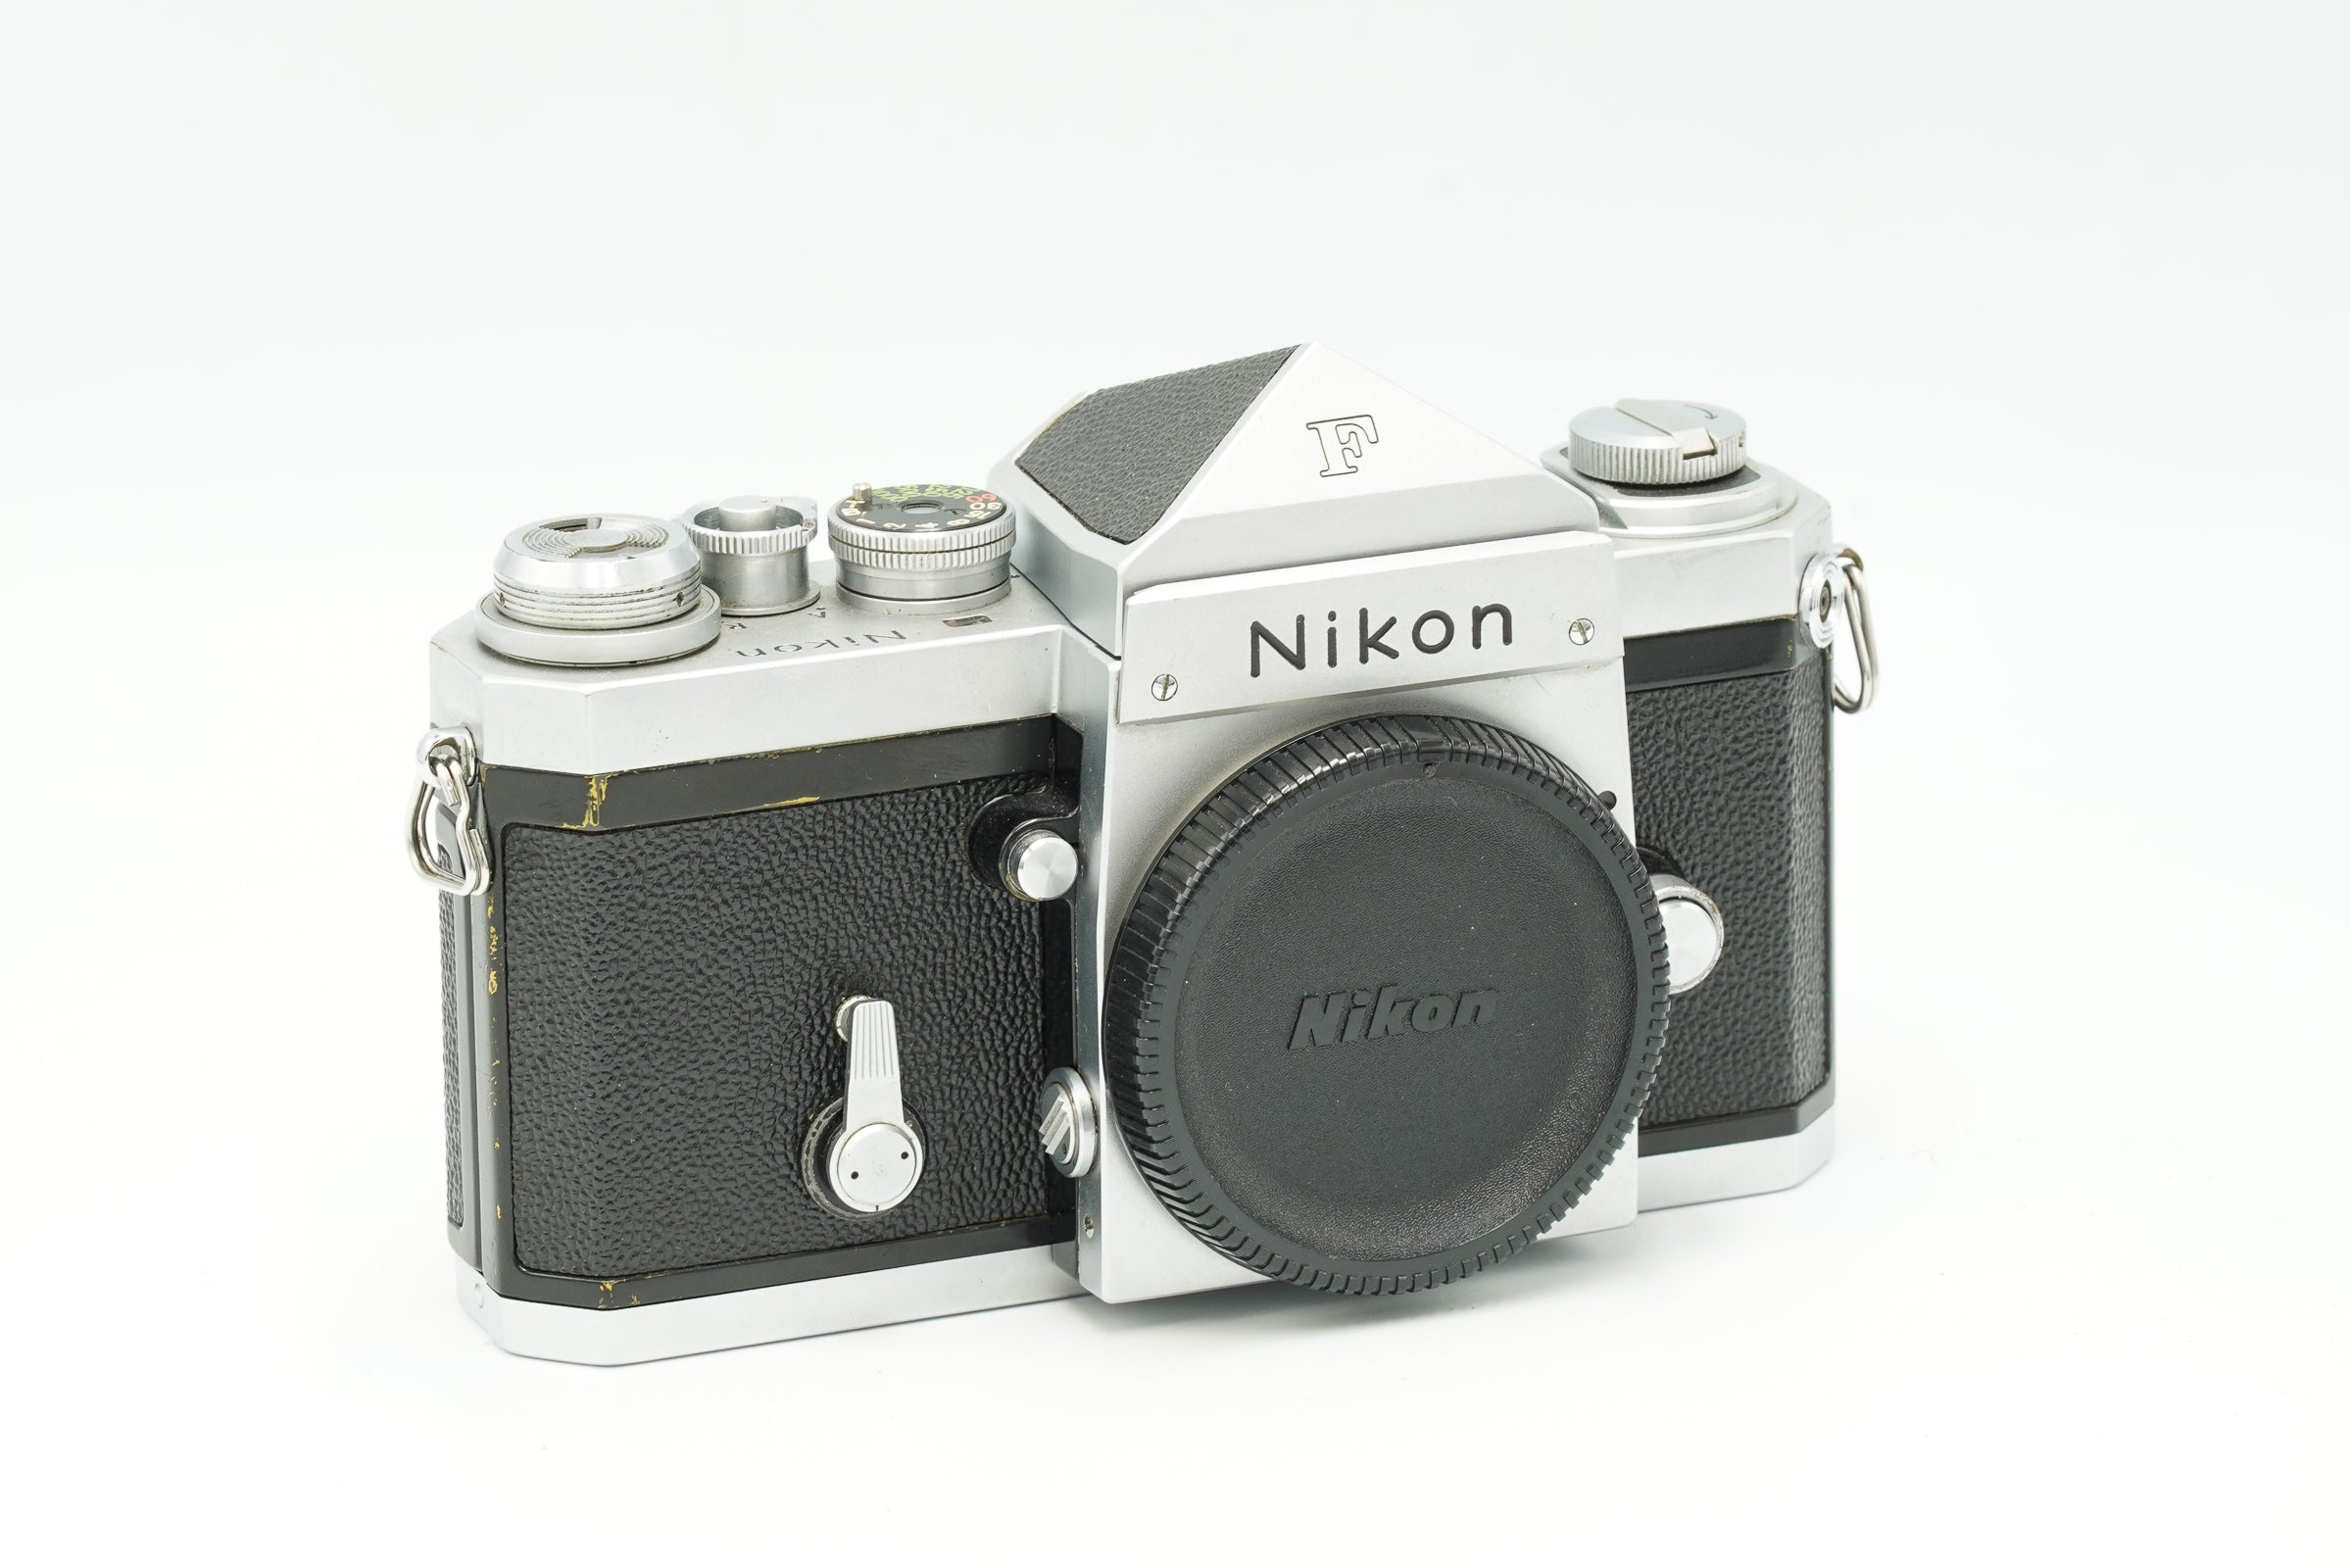 The original Nikon F body, with various lens options